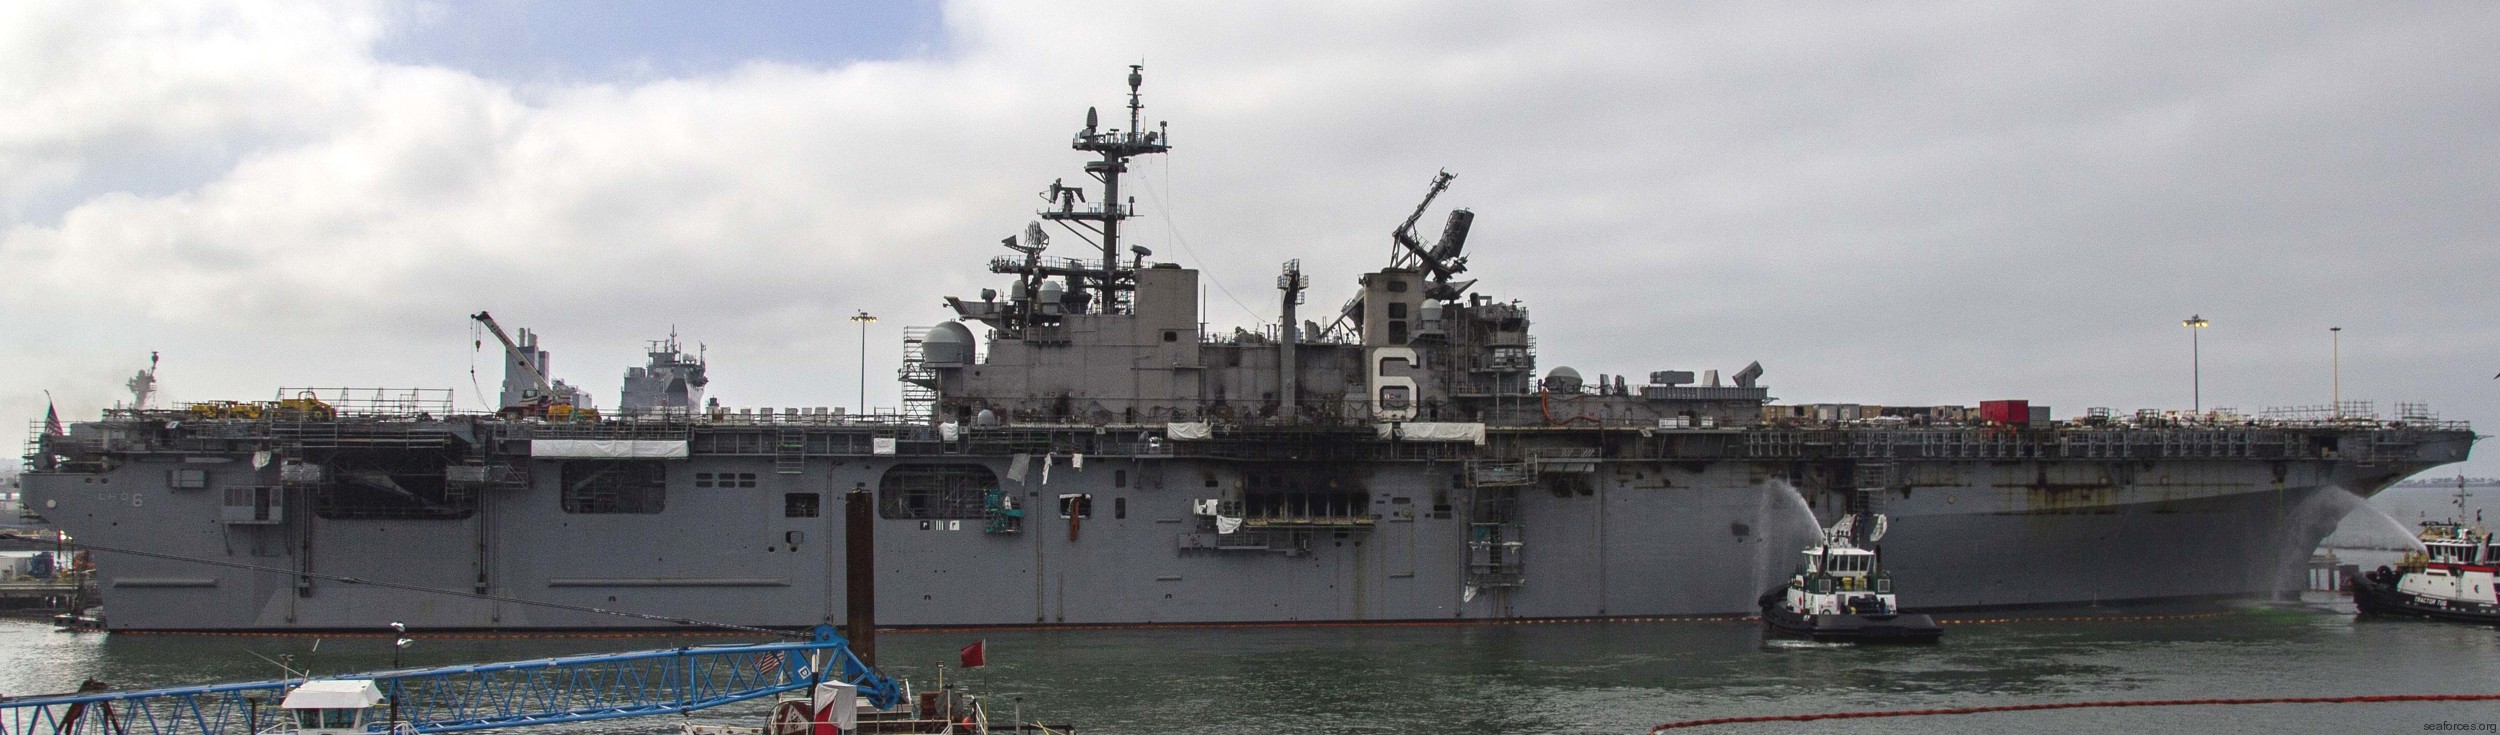 Warship USS Bonhomme Richard New Navy Photo Amphibious Assault Ship 6 Sizes! 